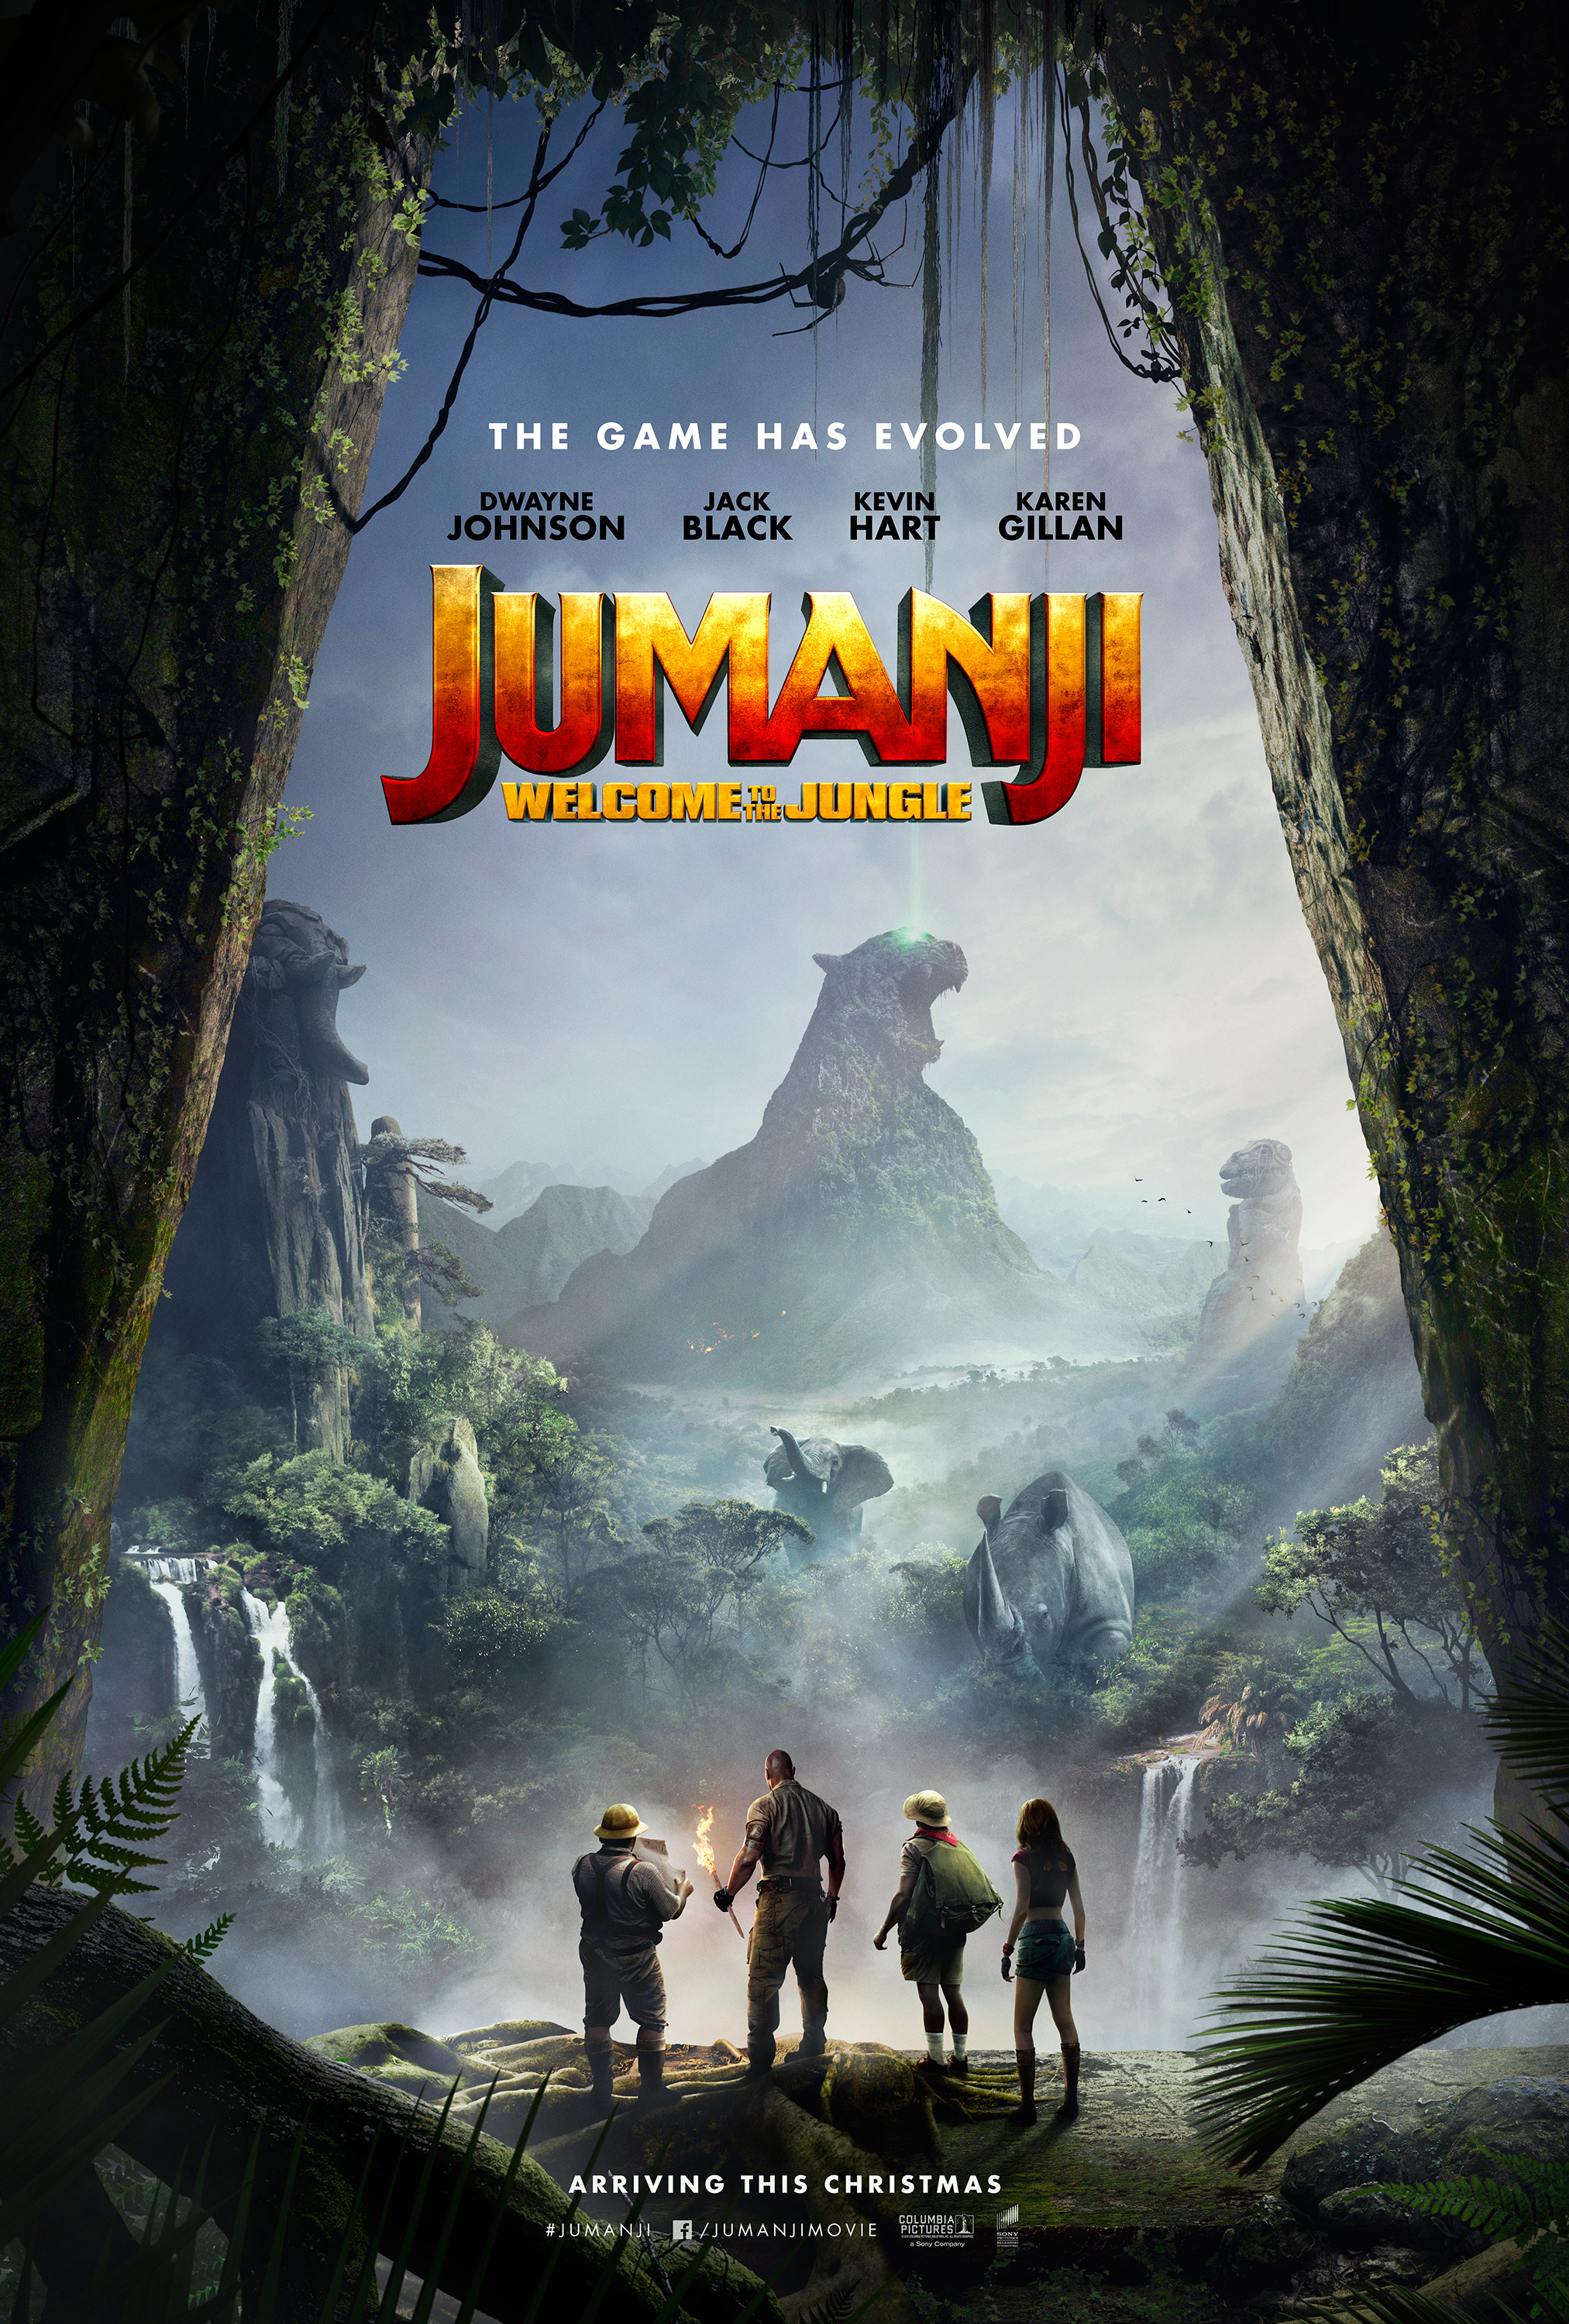 Jumanji Image Wele To The Jungle Poster HD